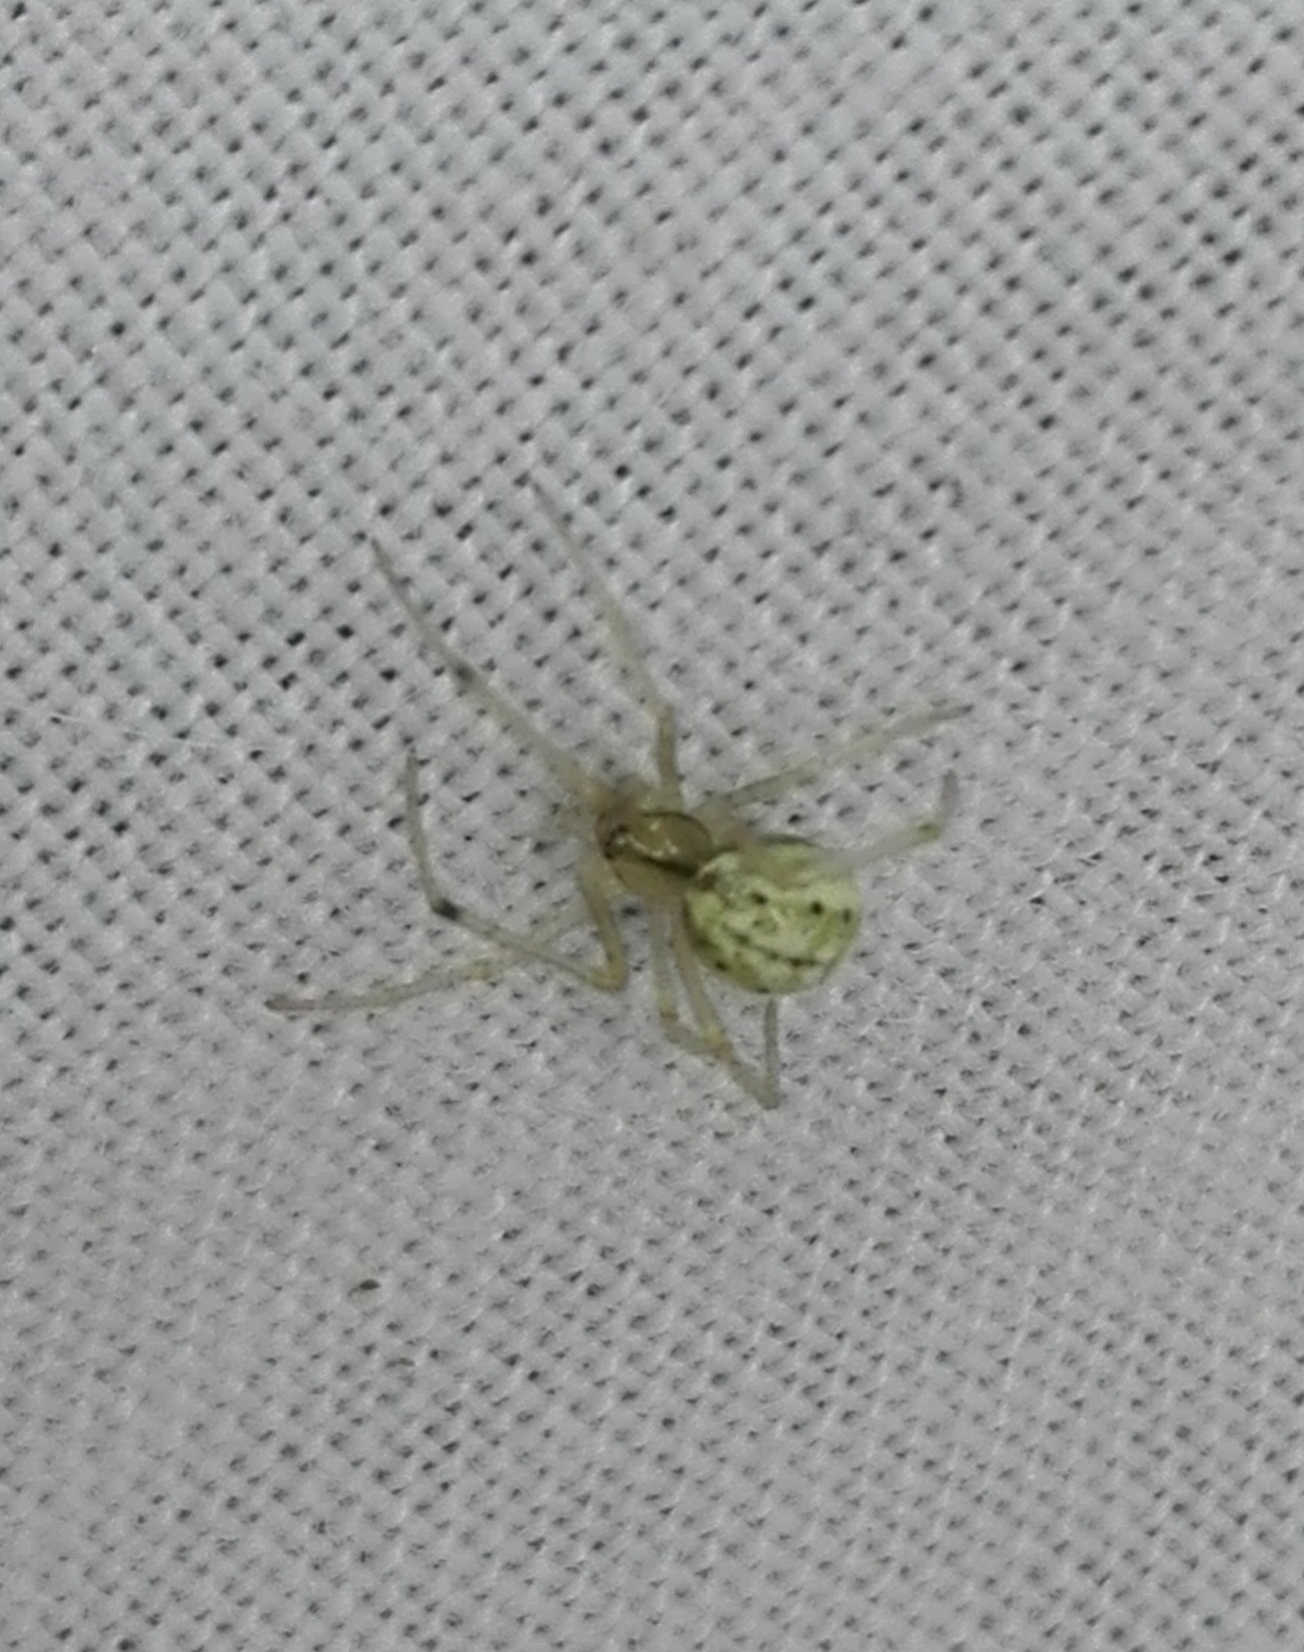 #162 Green Orb Weaver Spider